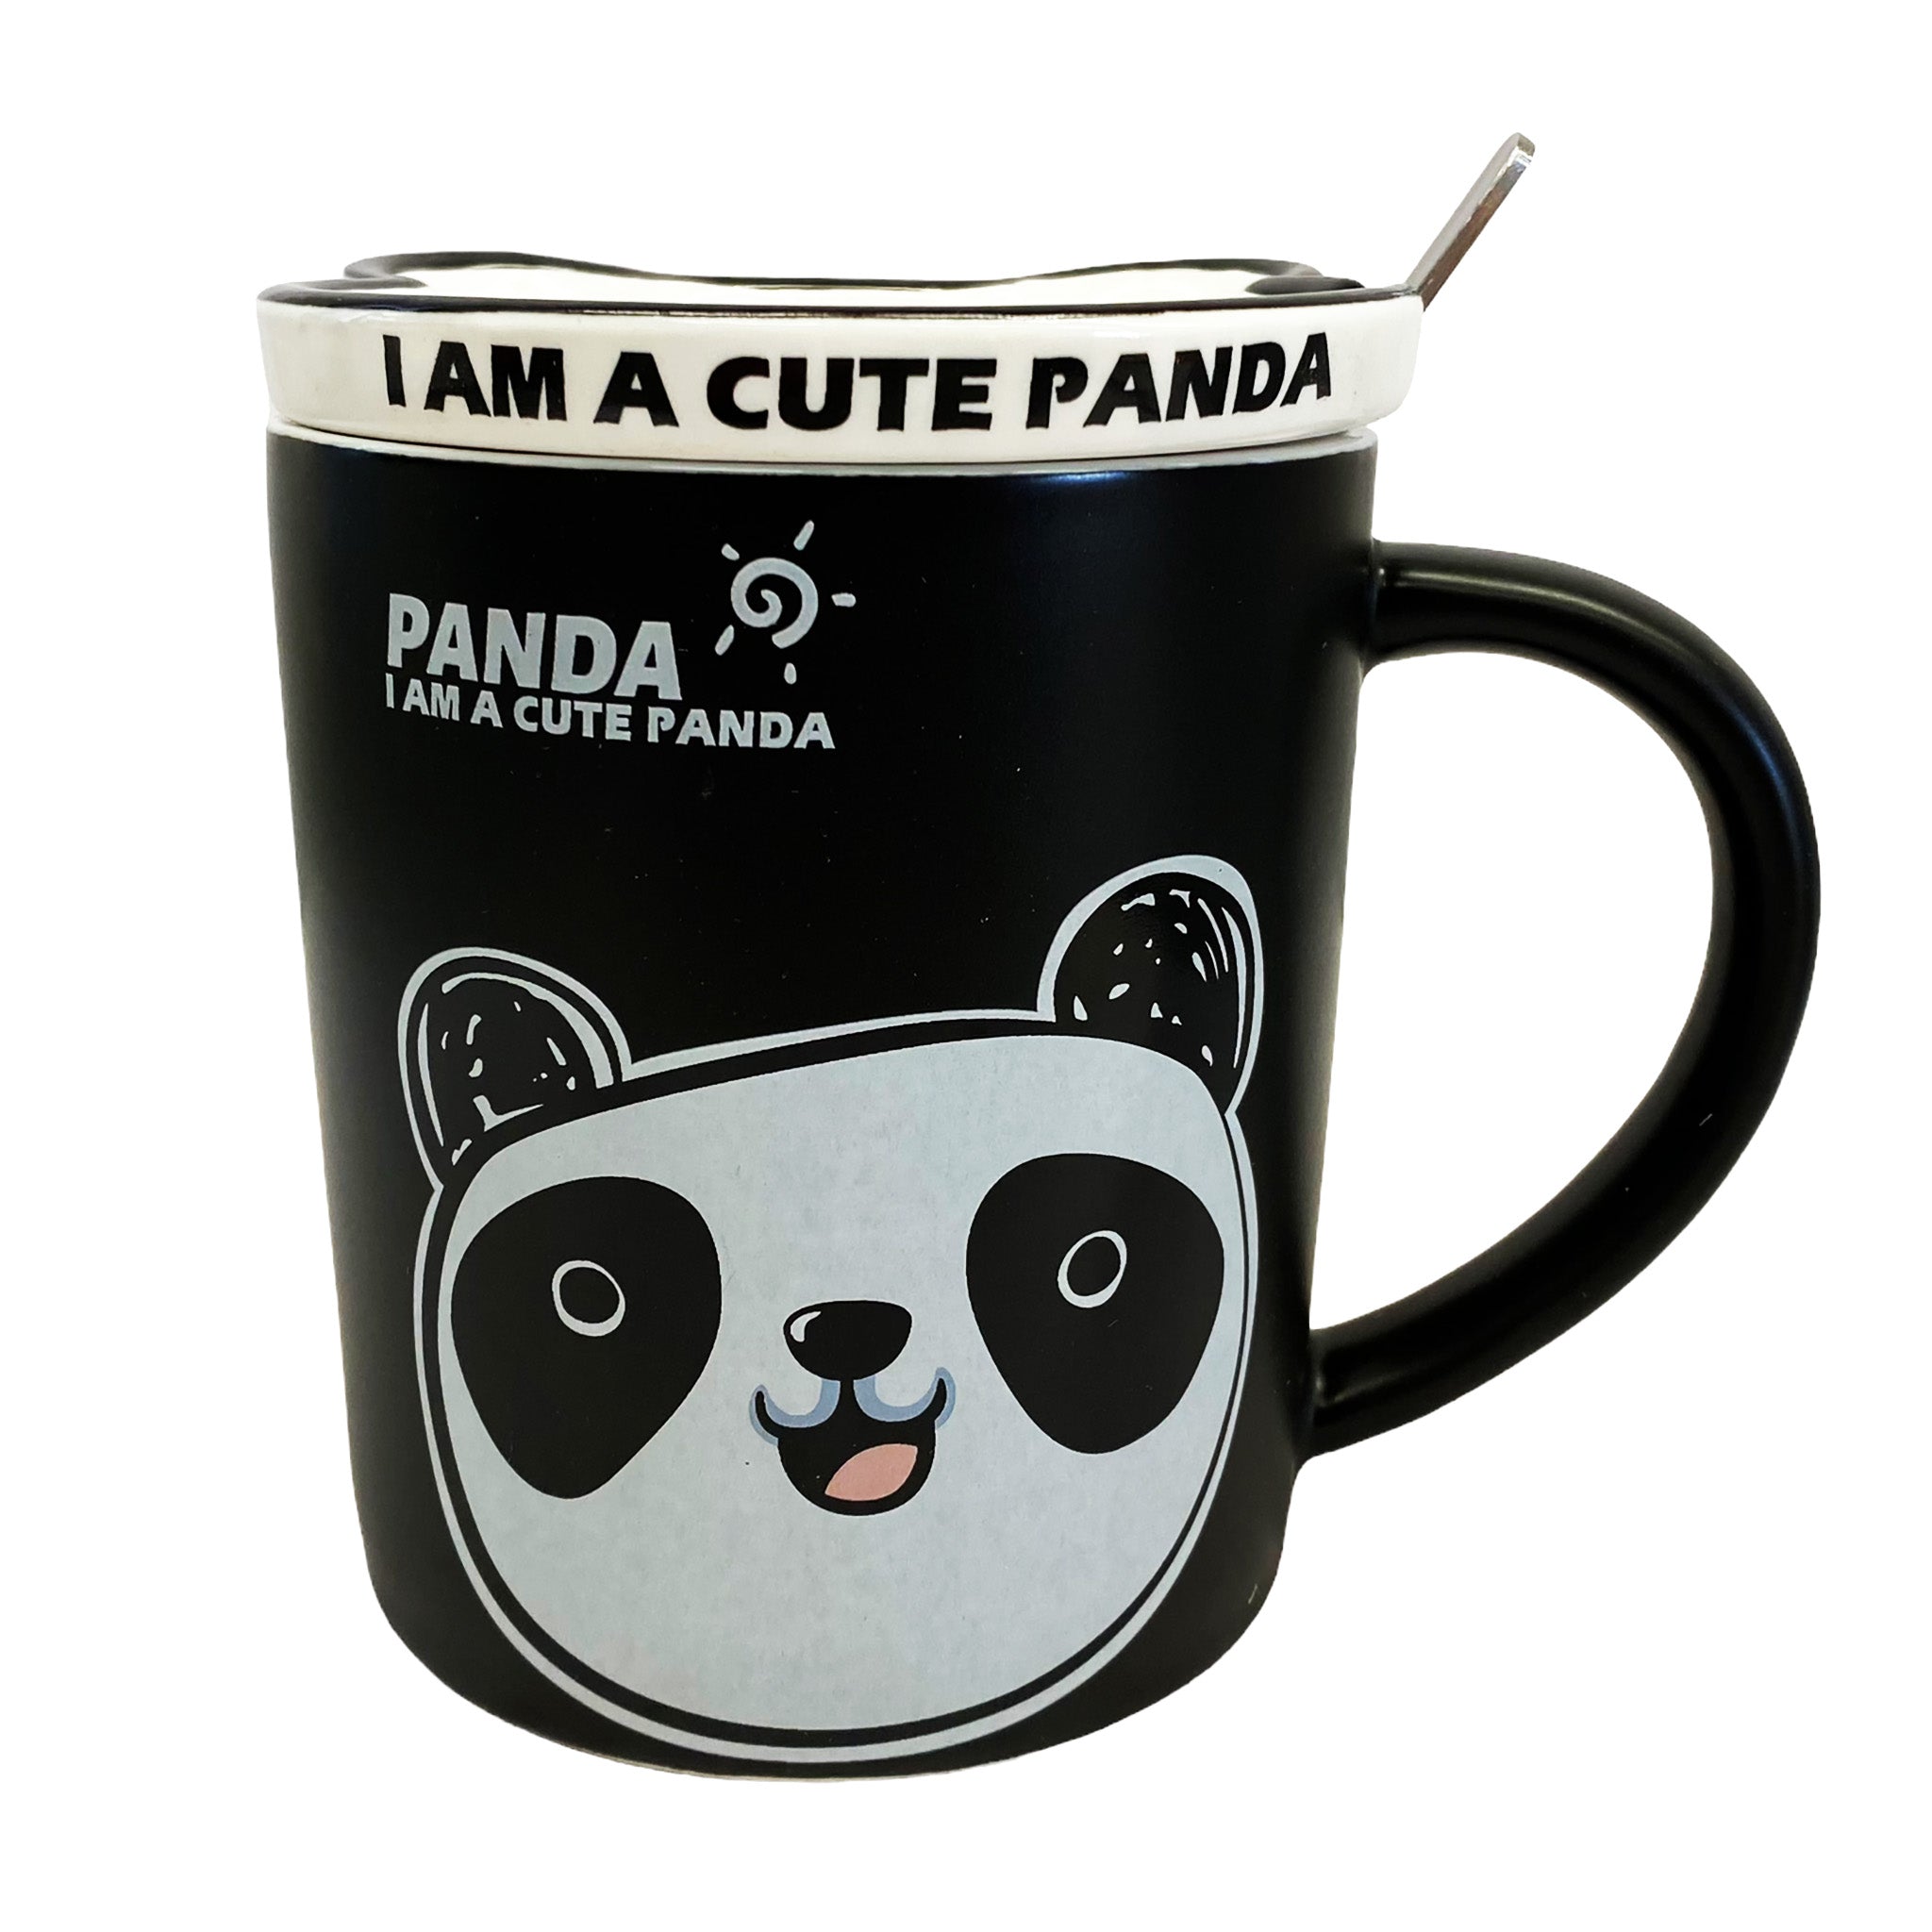 Ceramic Mug with Lid & Spoon Set - Black Panda 3 x 4 inches - Just Asian  Food